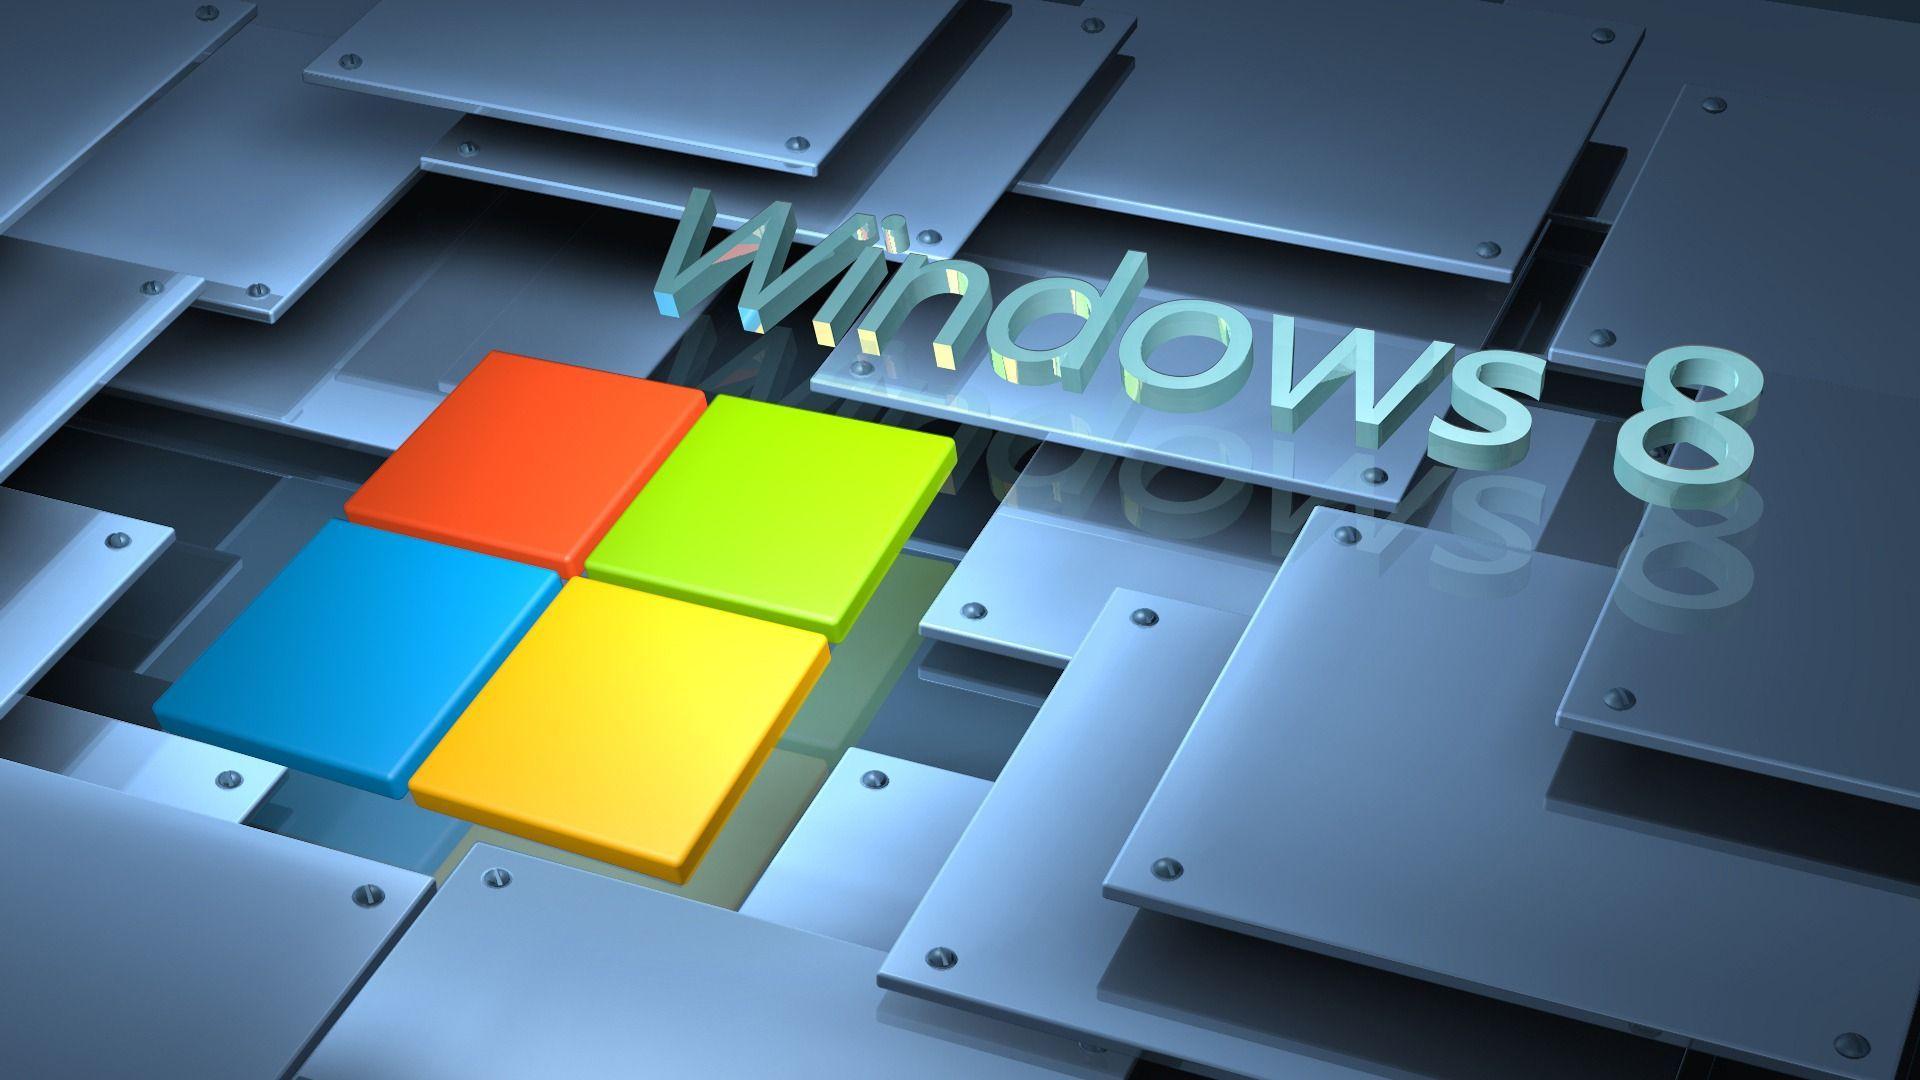 3D Windows 8 1920 x 1080 Wallpapers